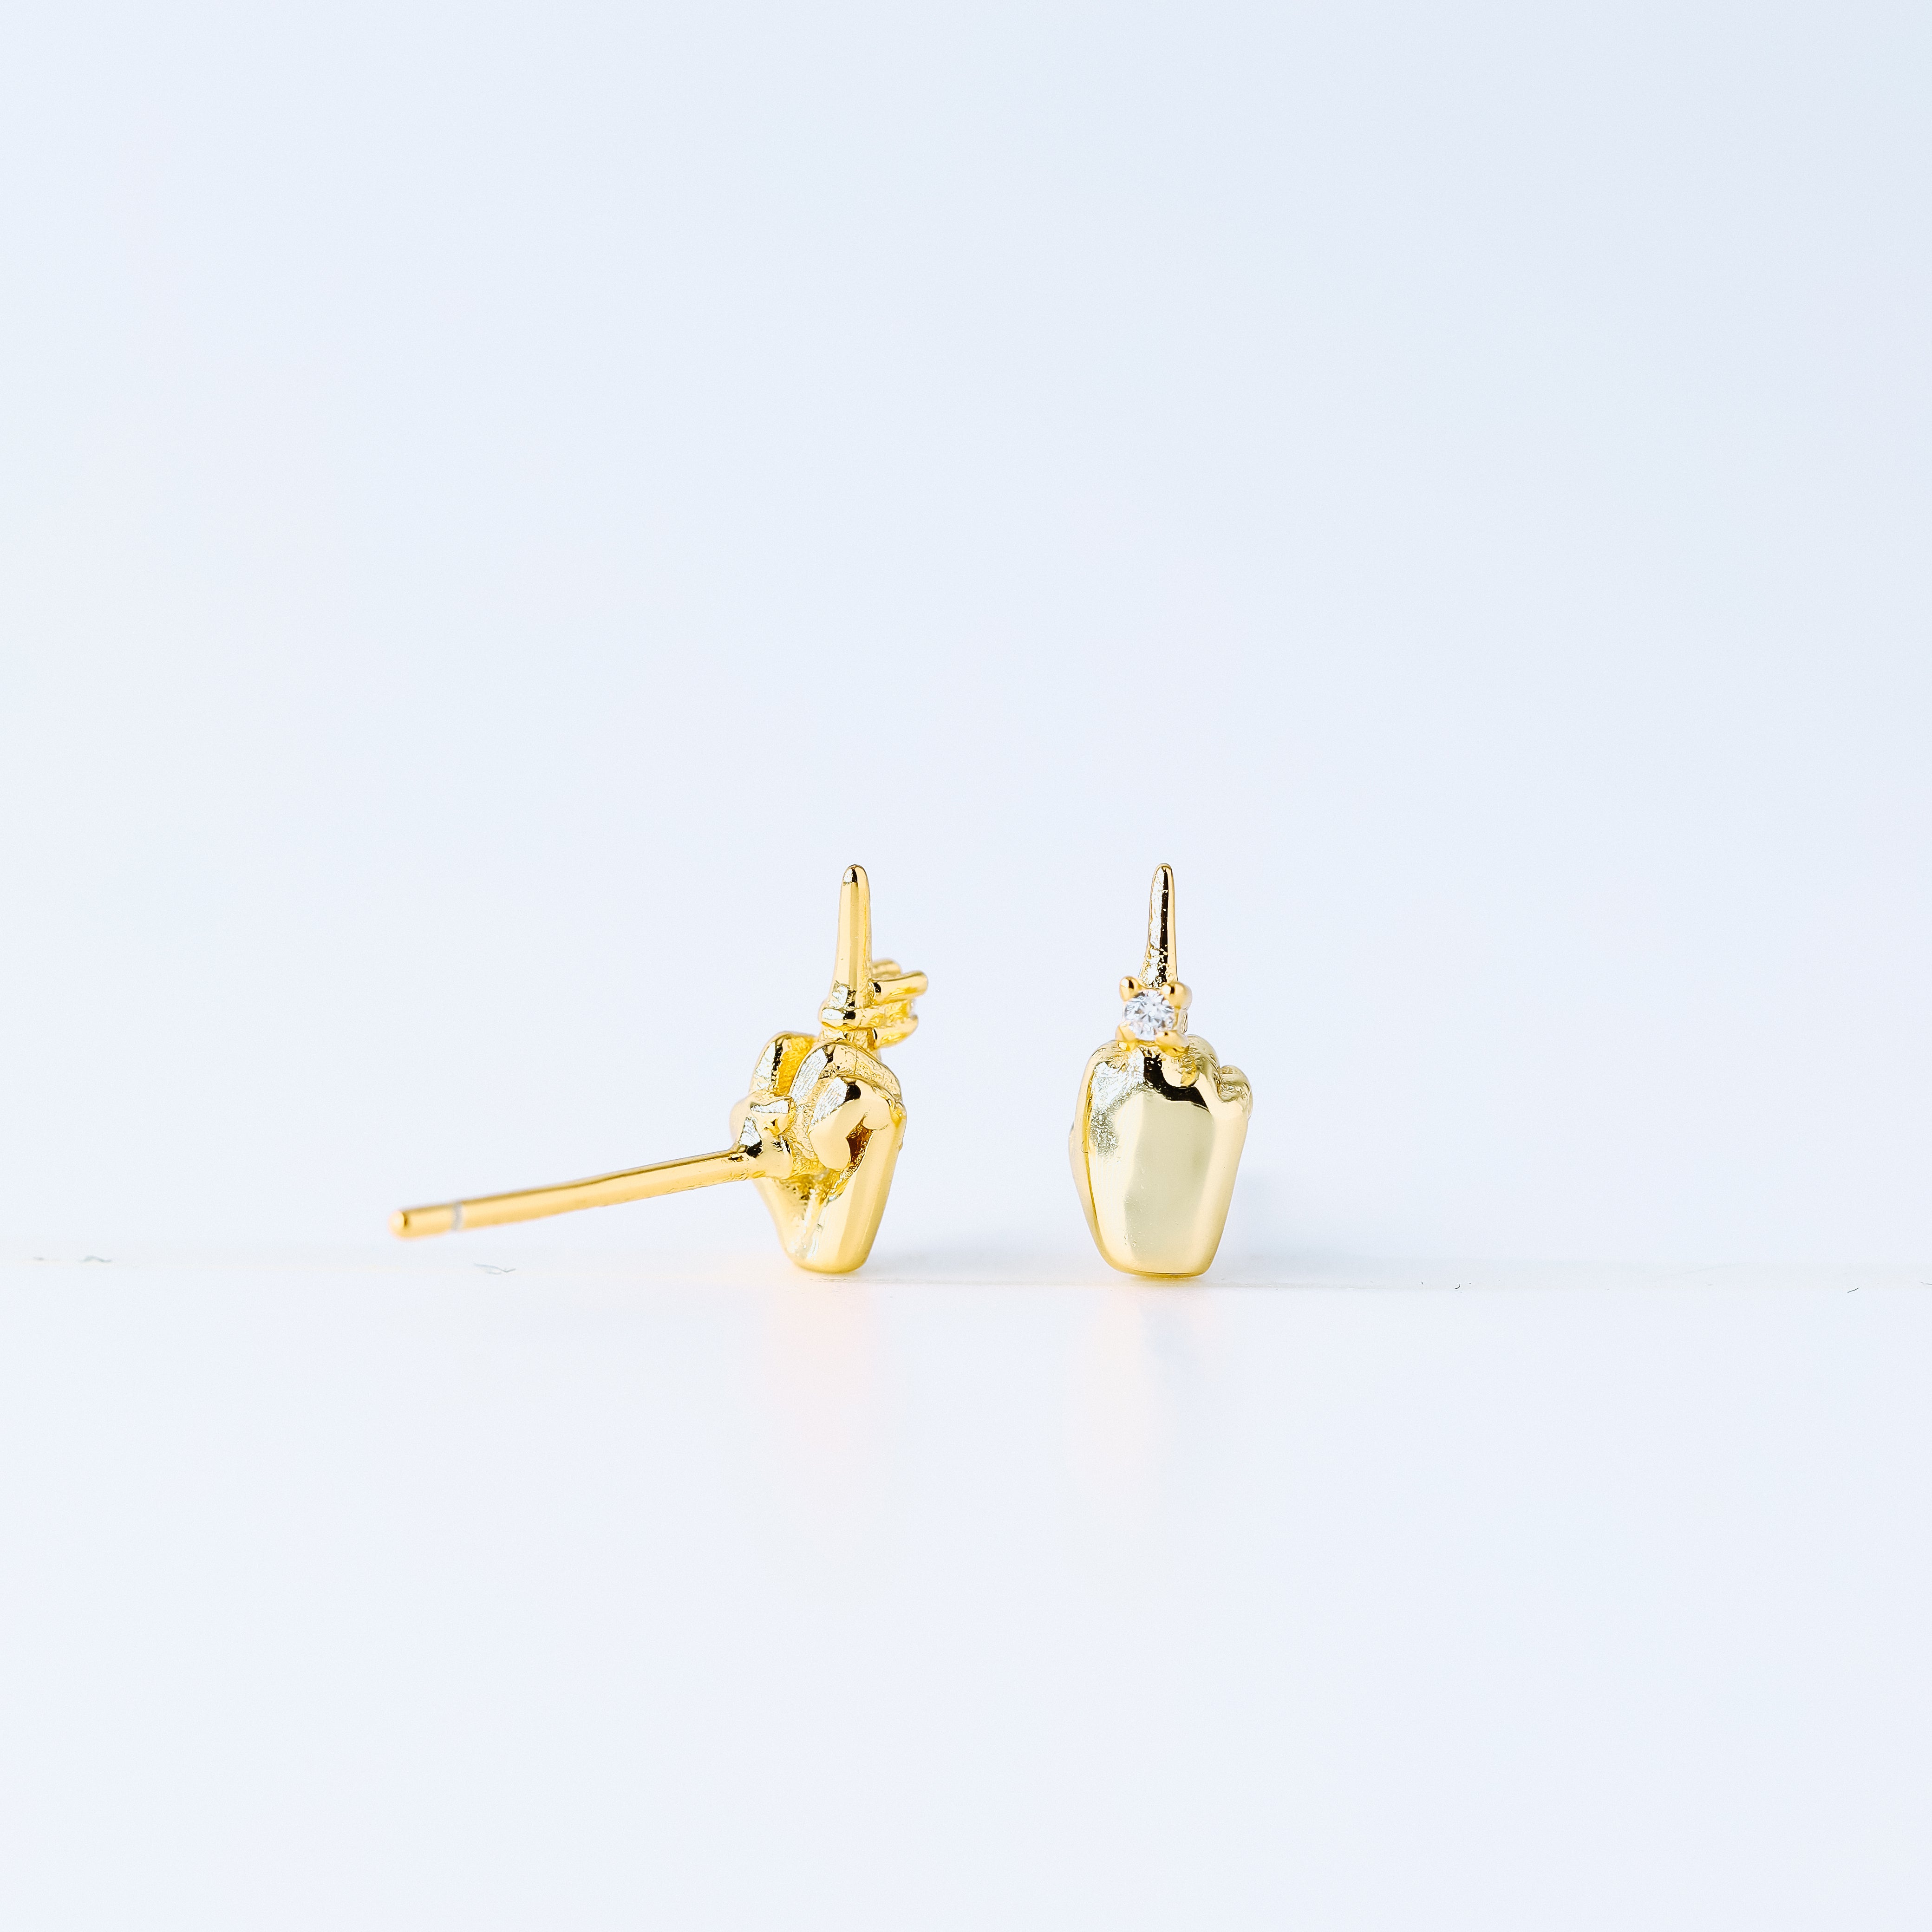 Doris Panos Gold-Plated Sterling Silver Medusa CZ Hoop Earrings - 20821882  | HSN